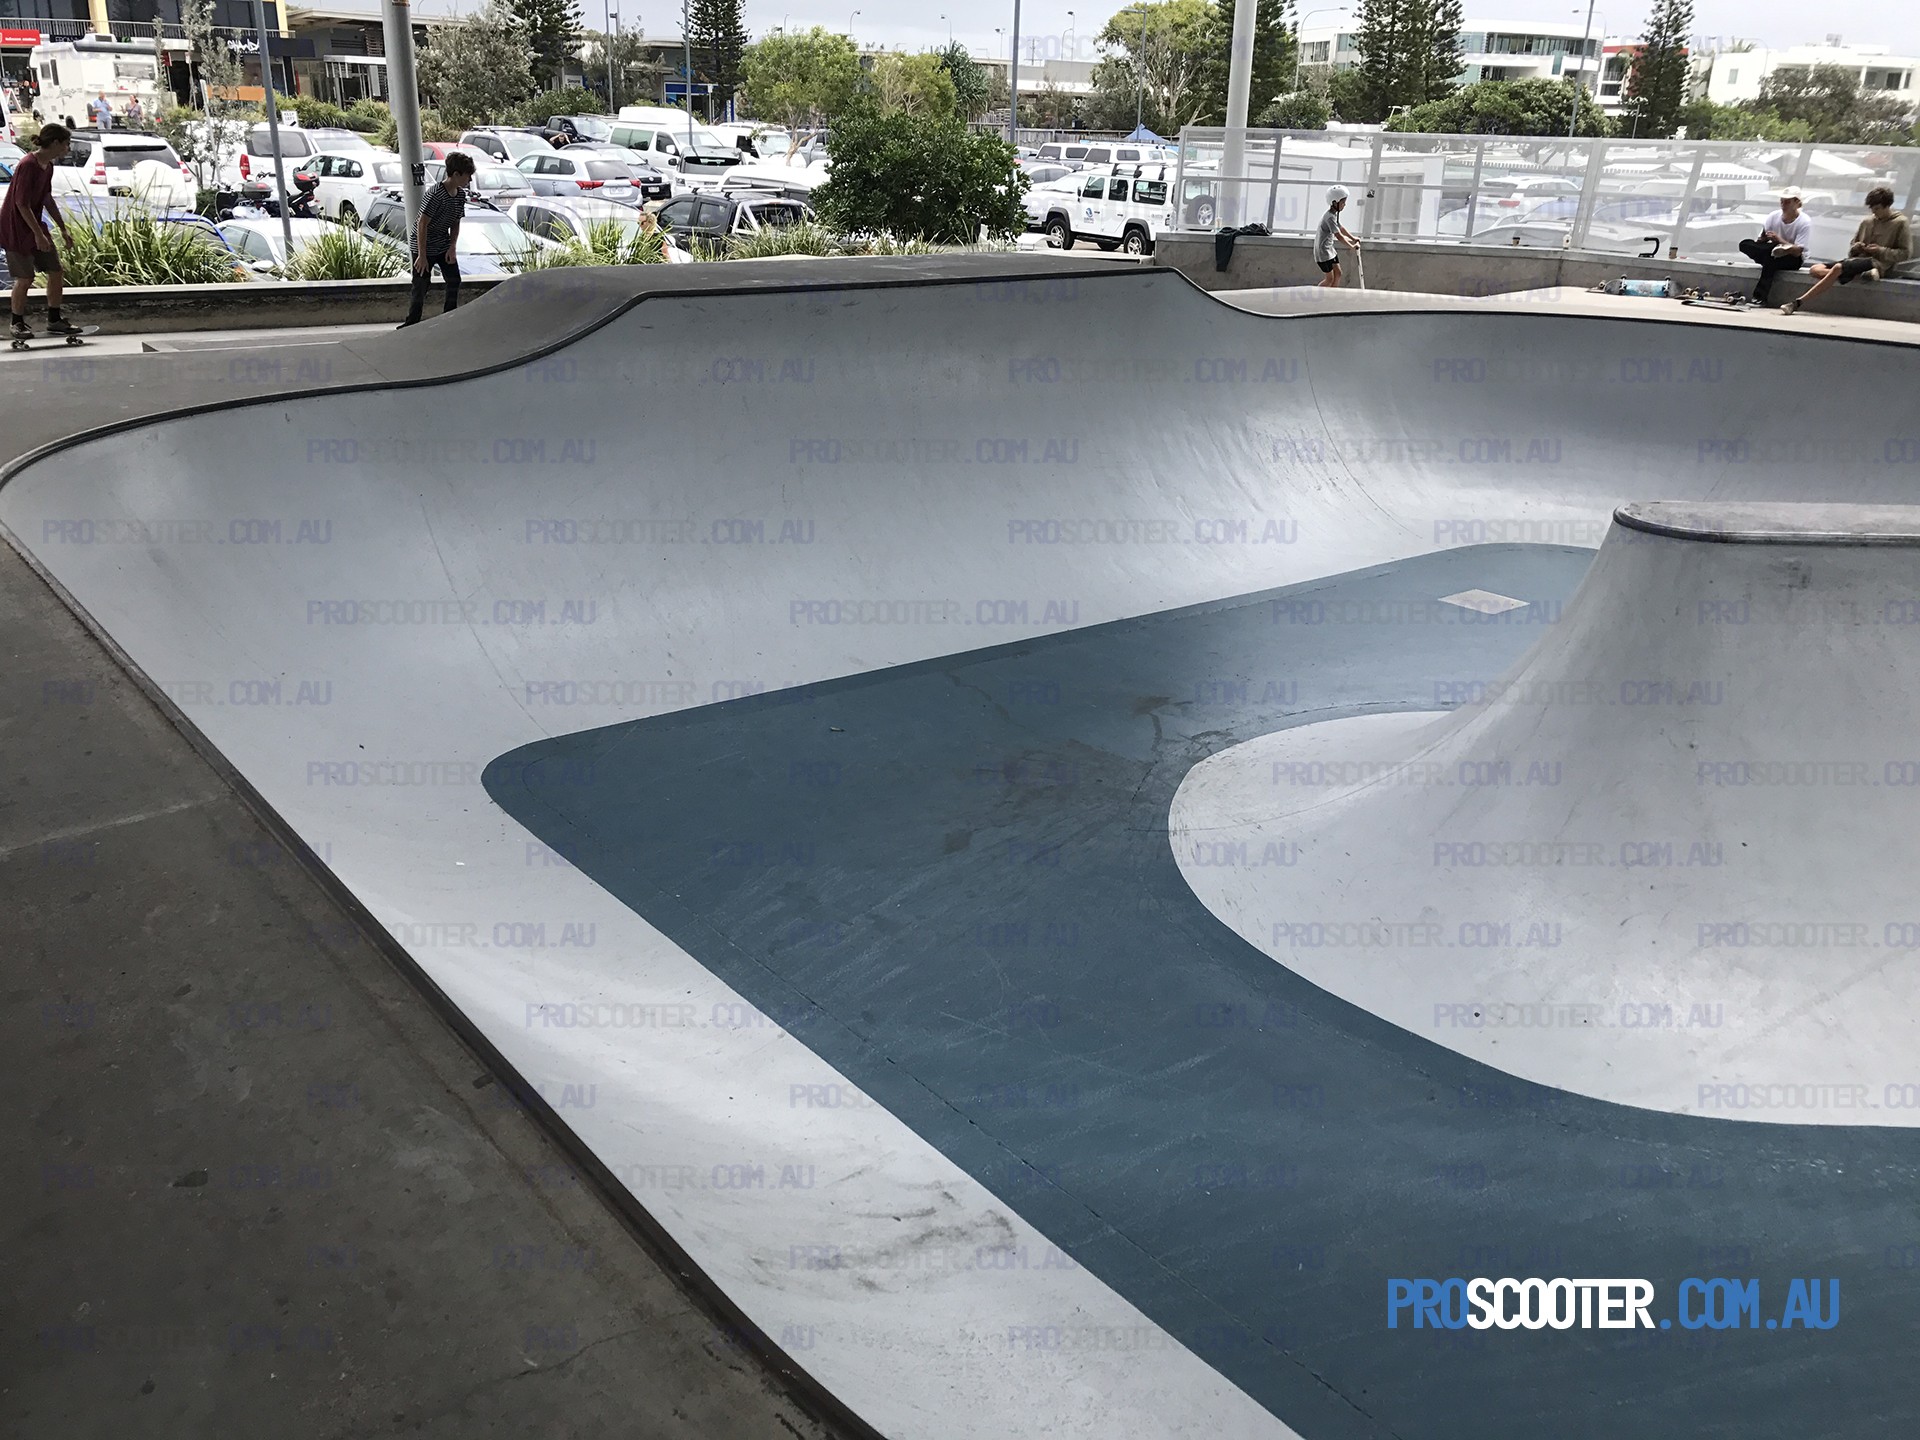 Coolum Skatepark concrete bowl